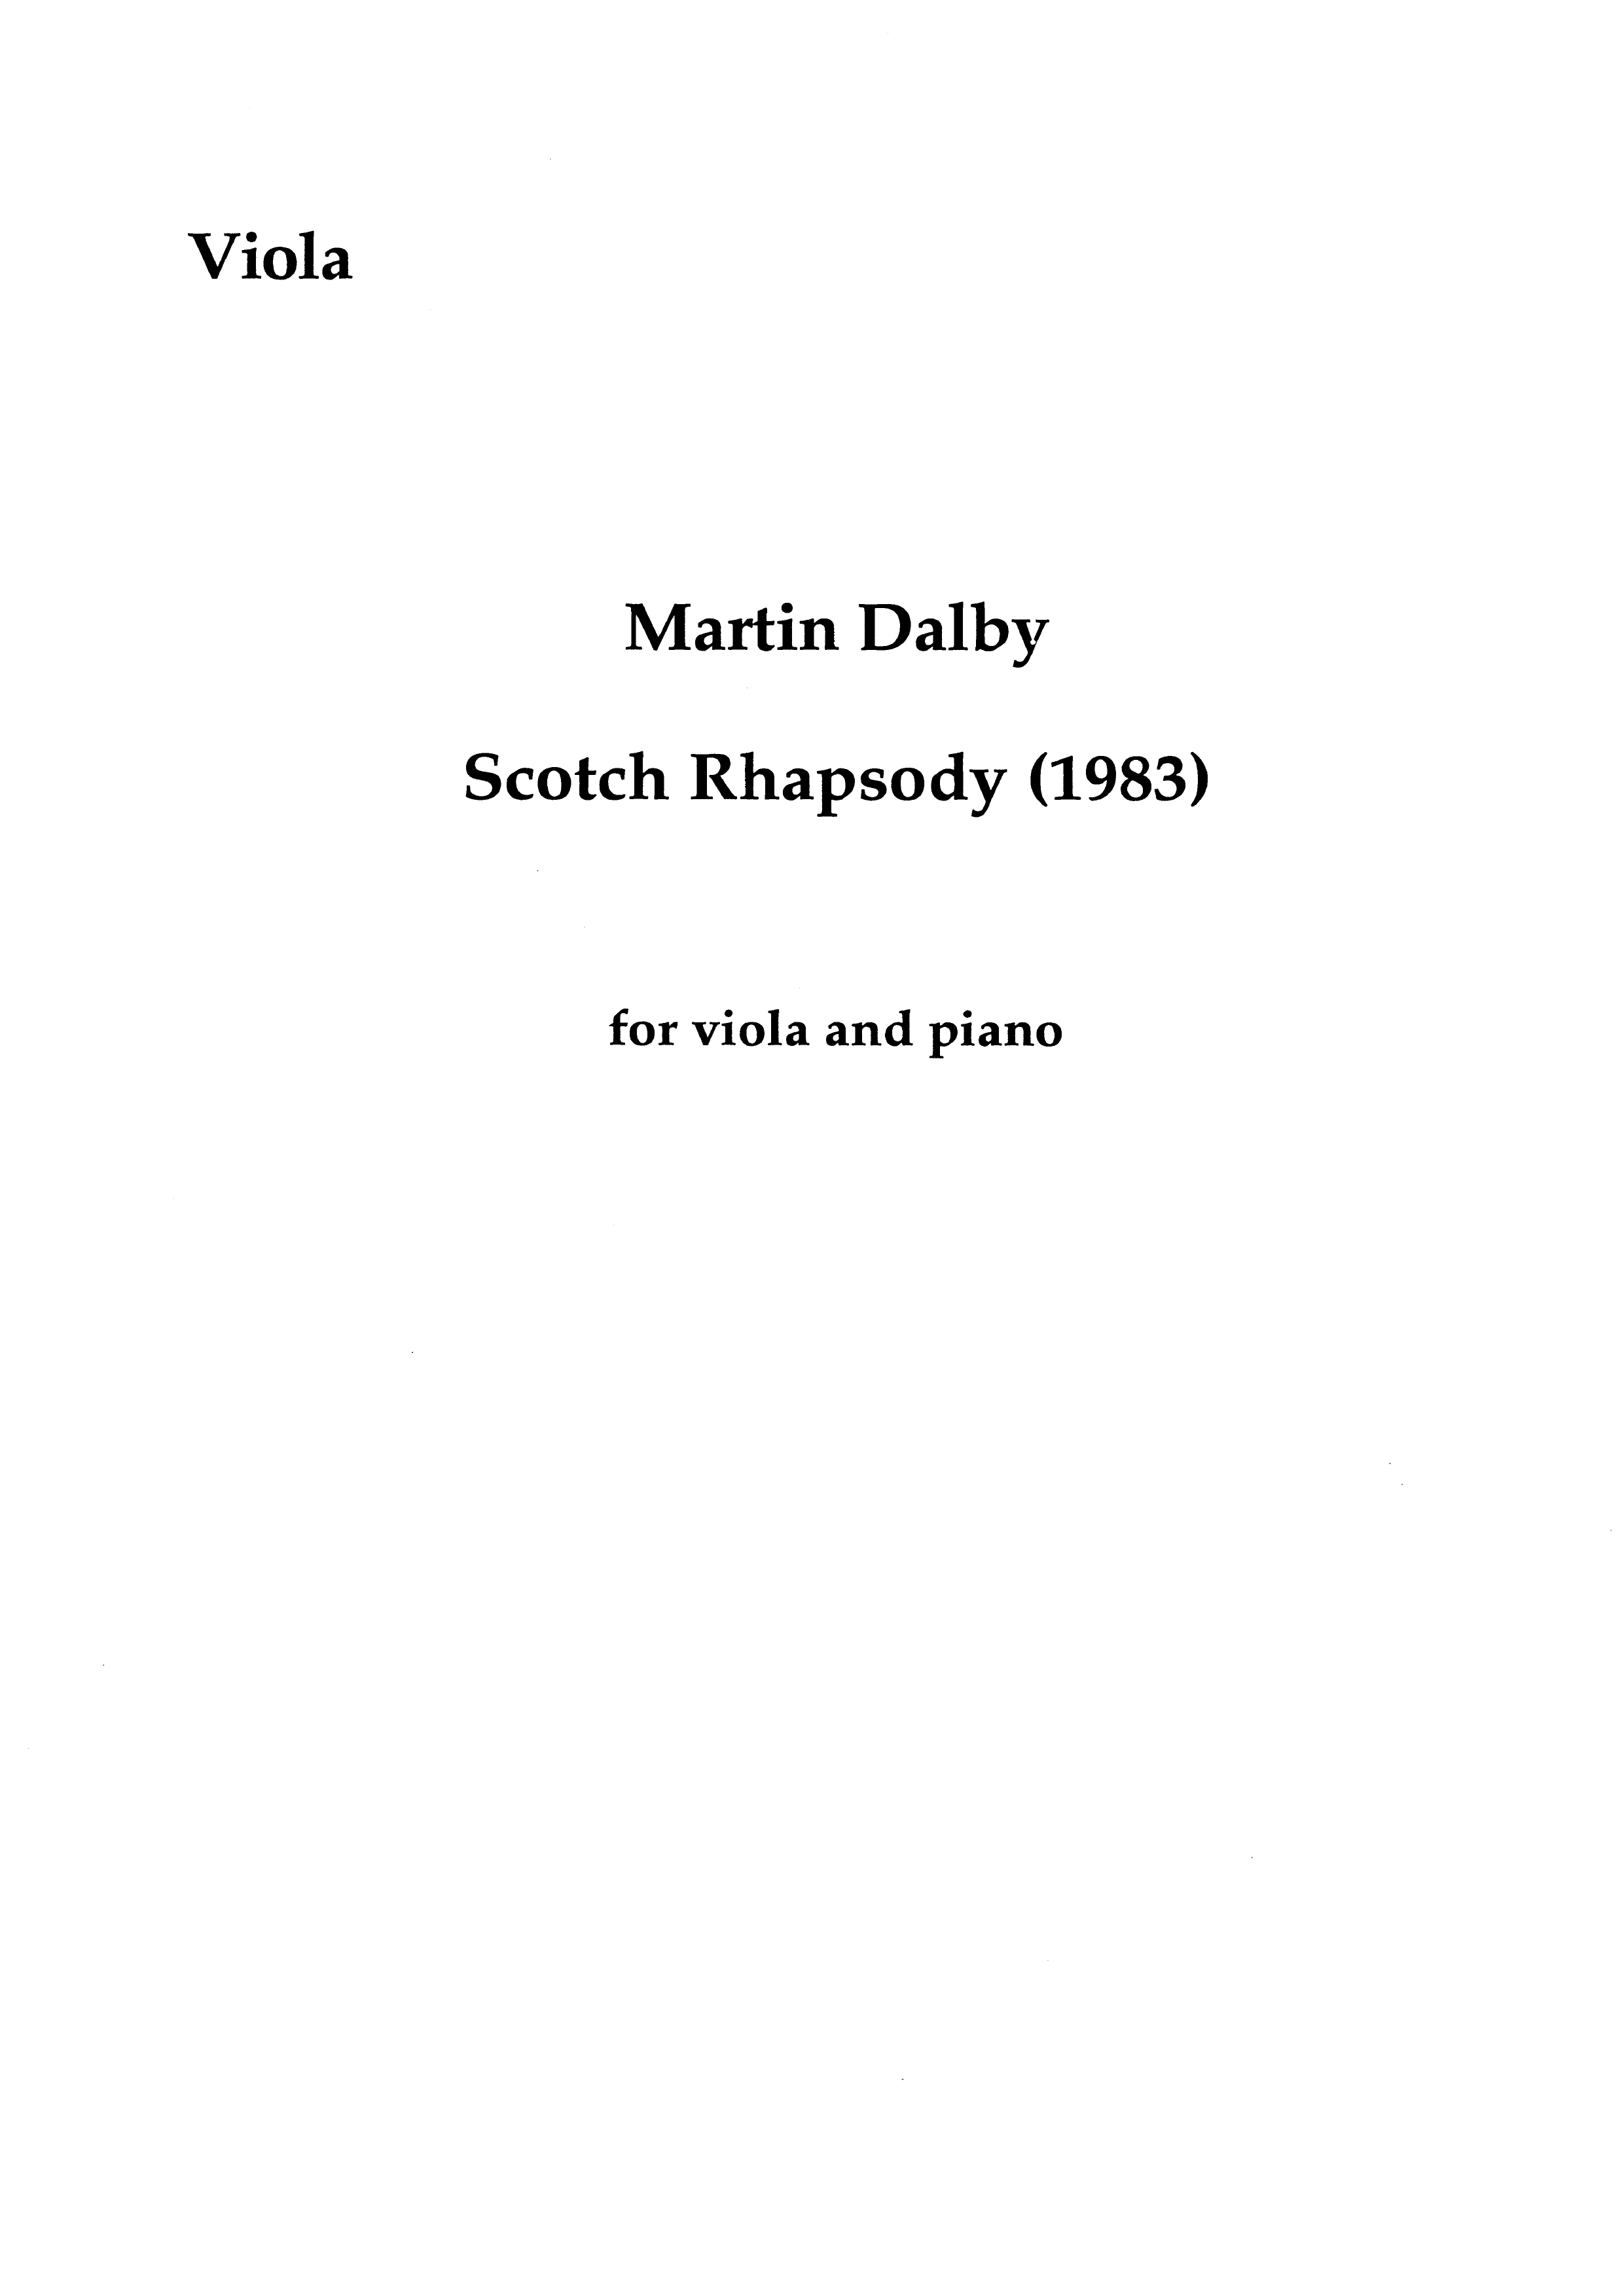 Dalby: Scotch Rhapsody (Viola Part and Piano Score)